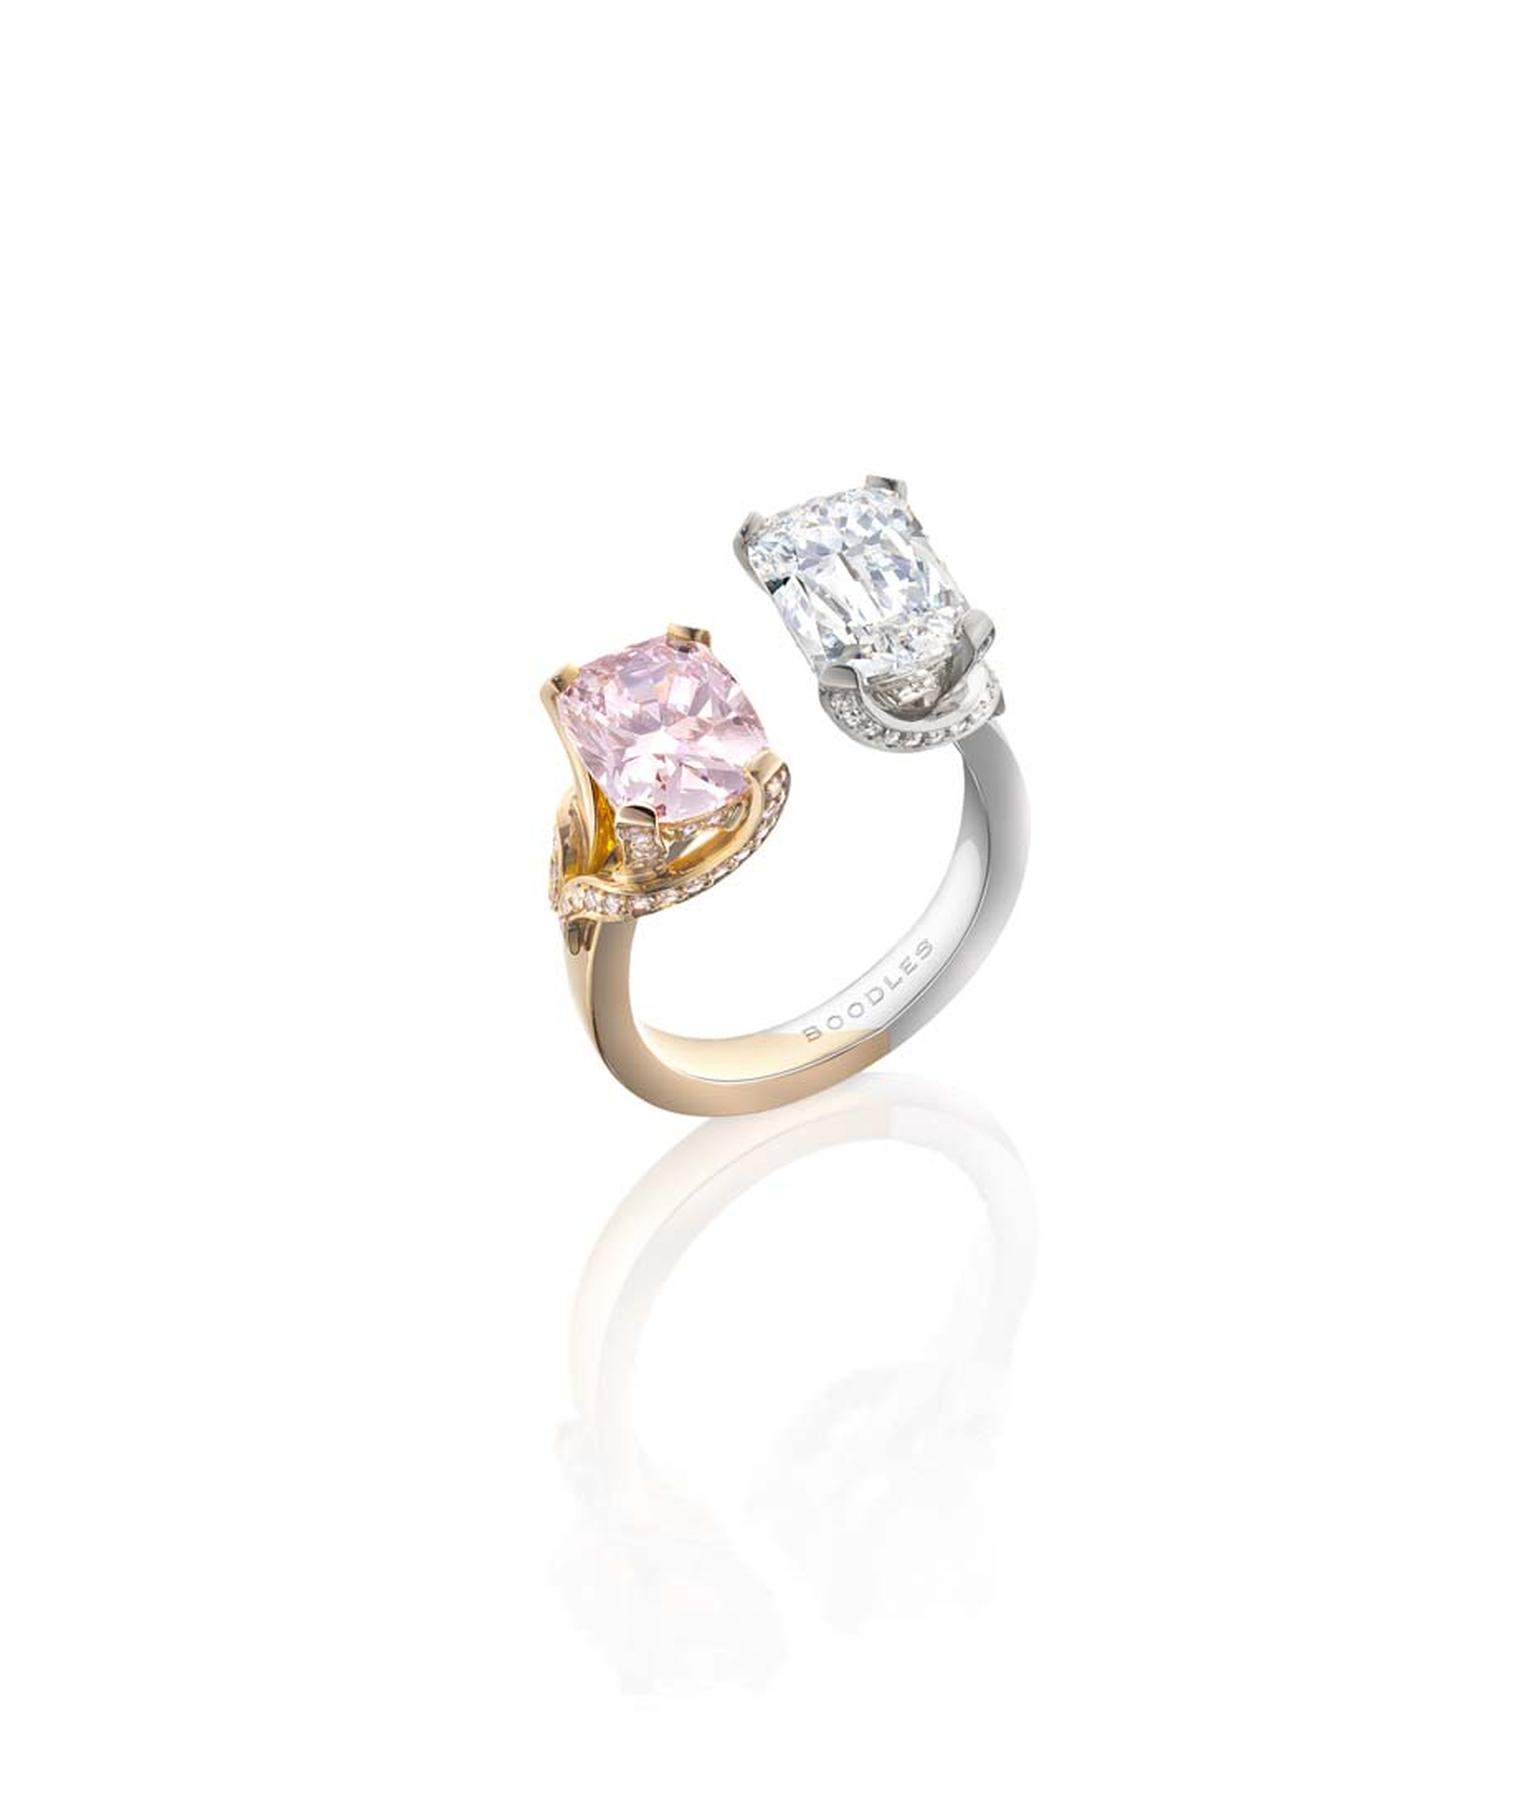 Boodles Gemini white and pink gold ring set with a 3ct Ashoka-cut diamond alongside a 2.5ct Fancy pink cushion-cut diamond (£POA)